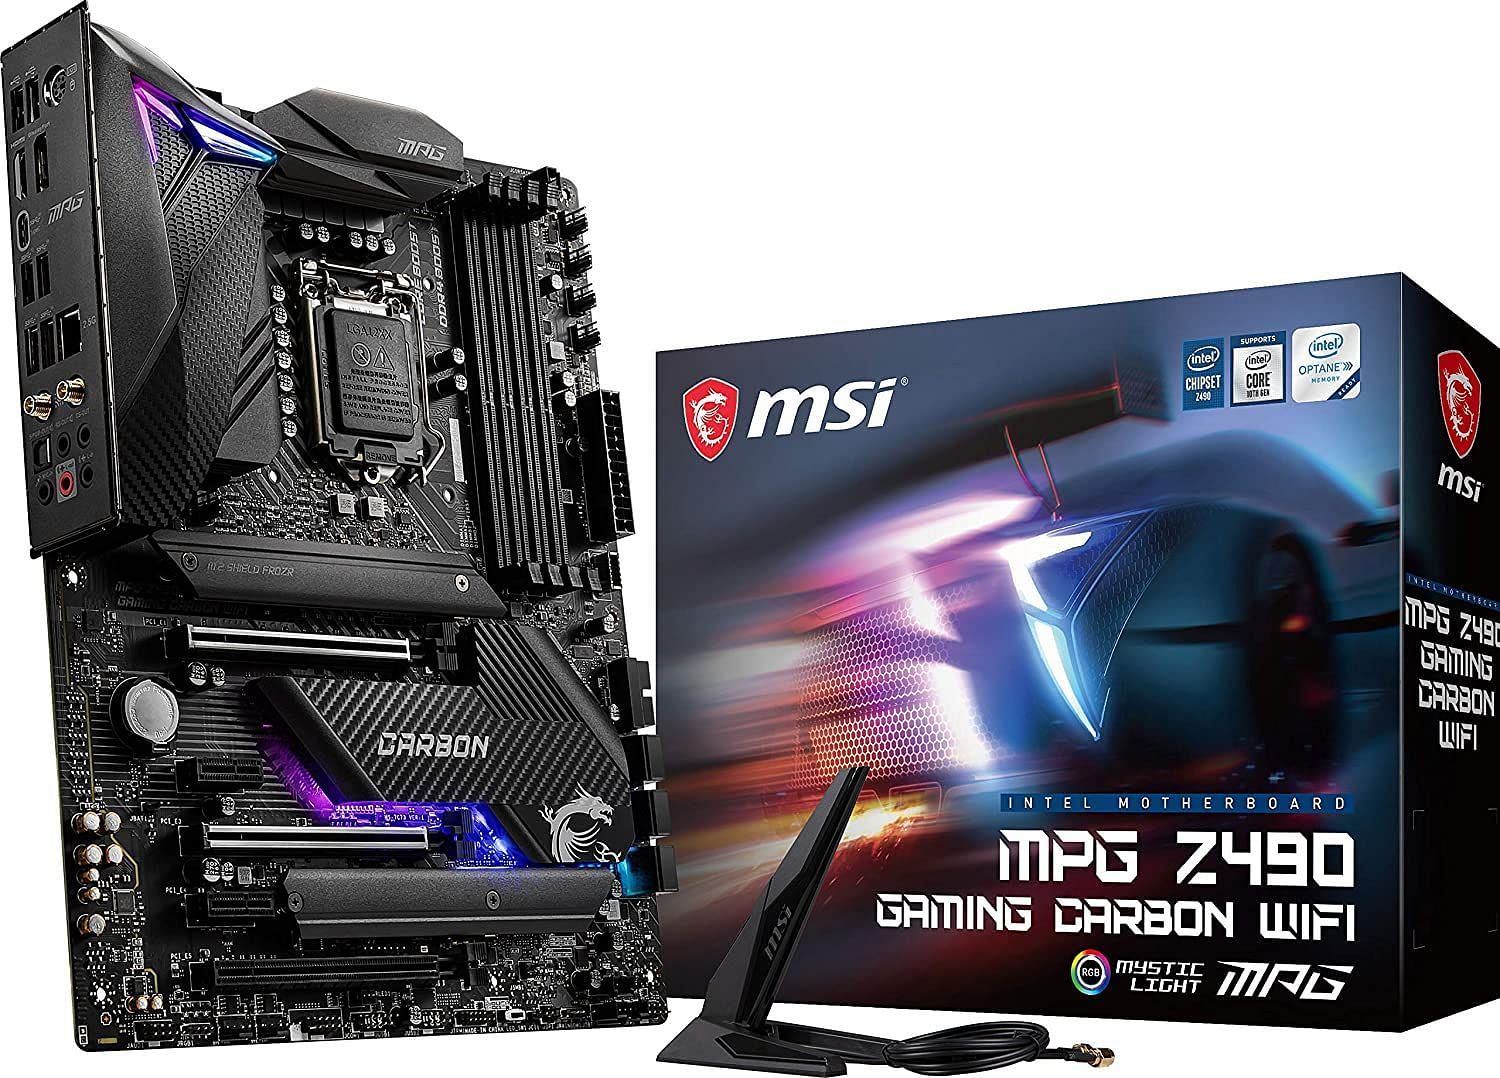 MSI MPG Z490 Gaming Carbon Wifi (Intel) (image via amazon)